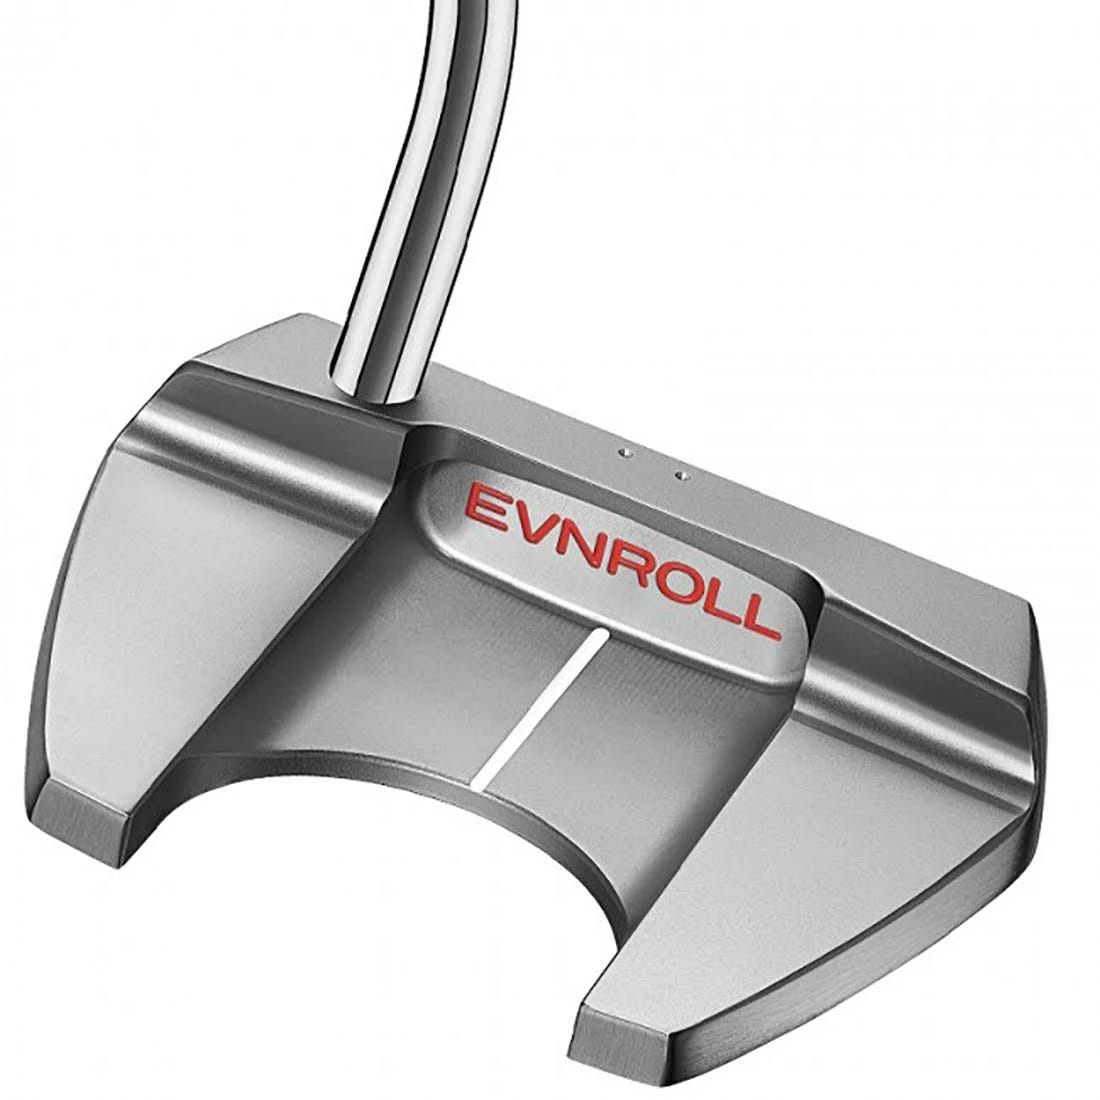 Evnroll ER5 Hatchback Mallet Putter: Masterpiece in Golf Putting Technology | Image